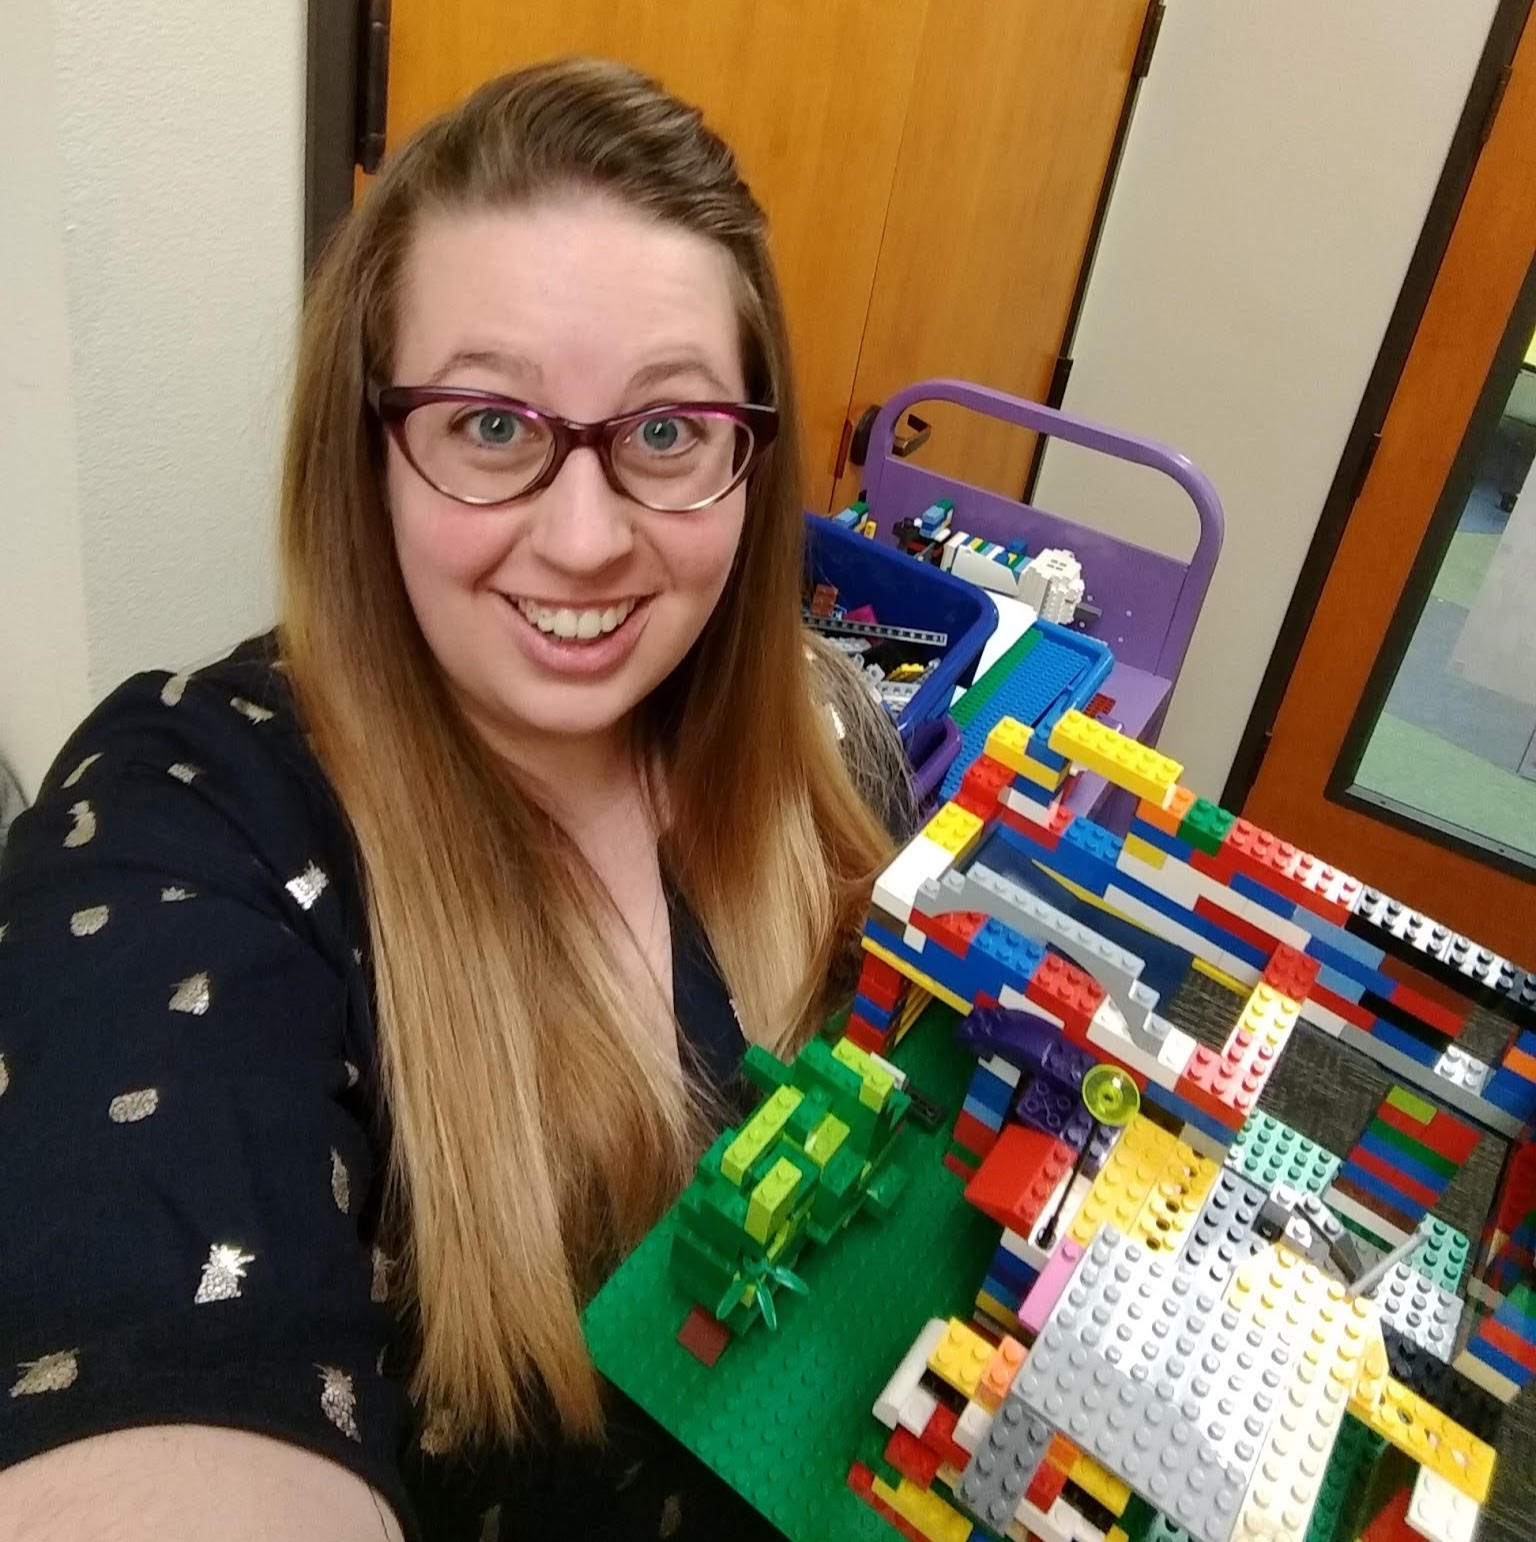 Photo of Korena holding up a Lego construction